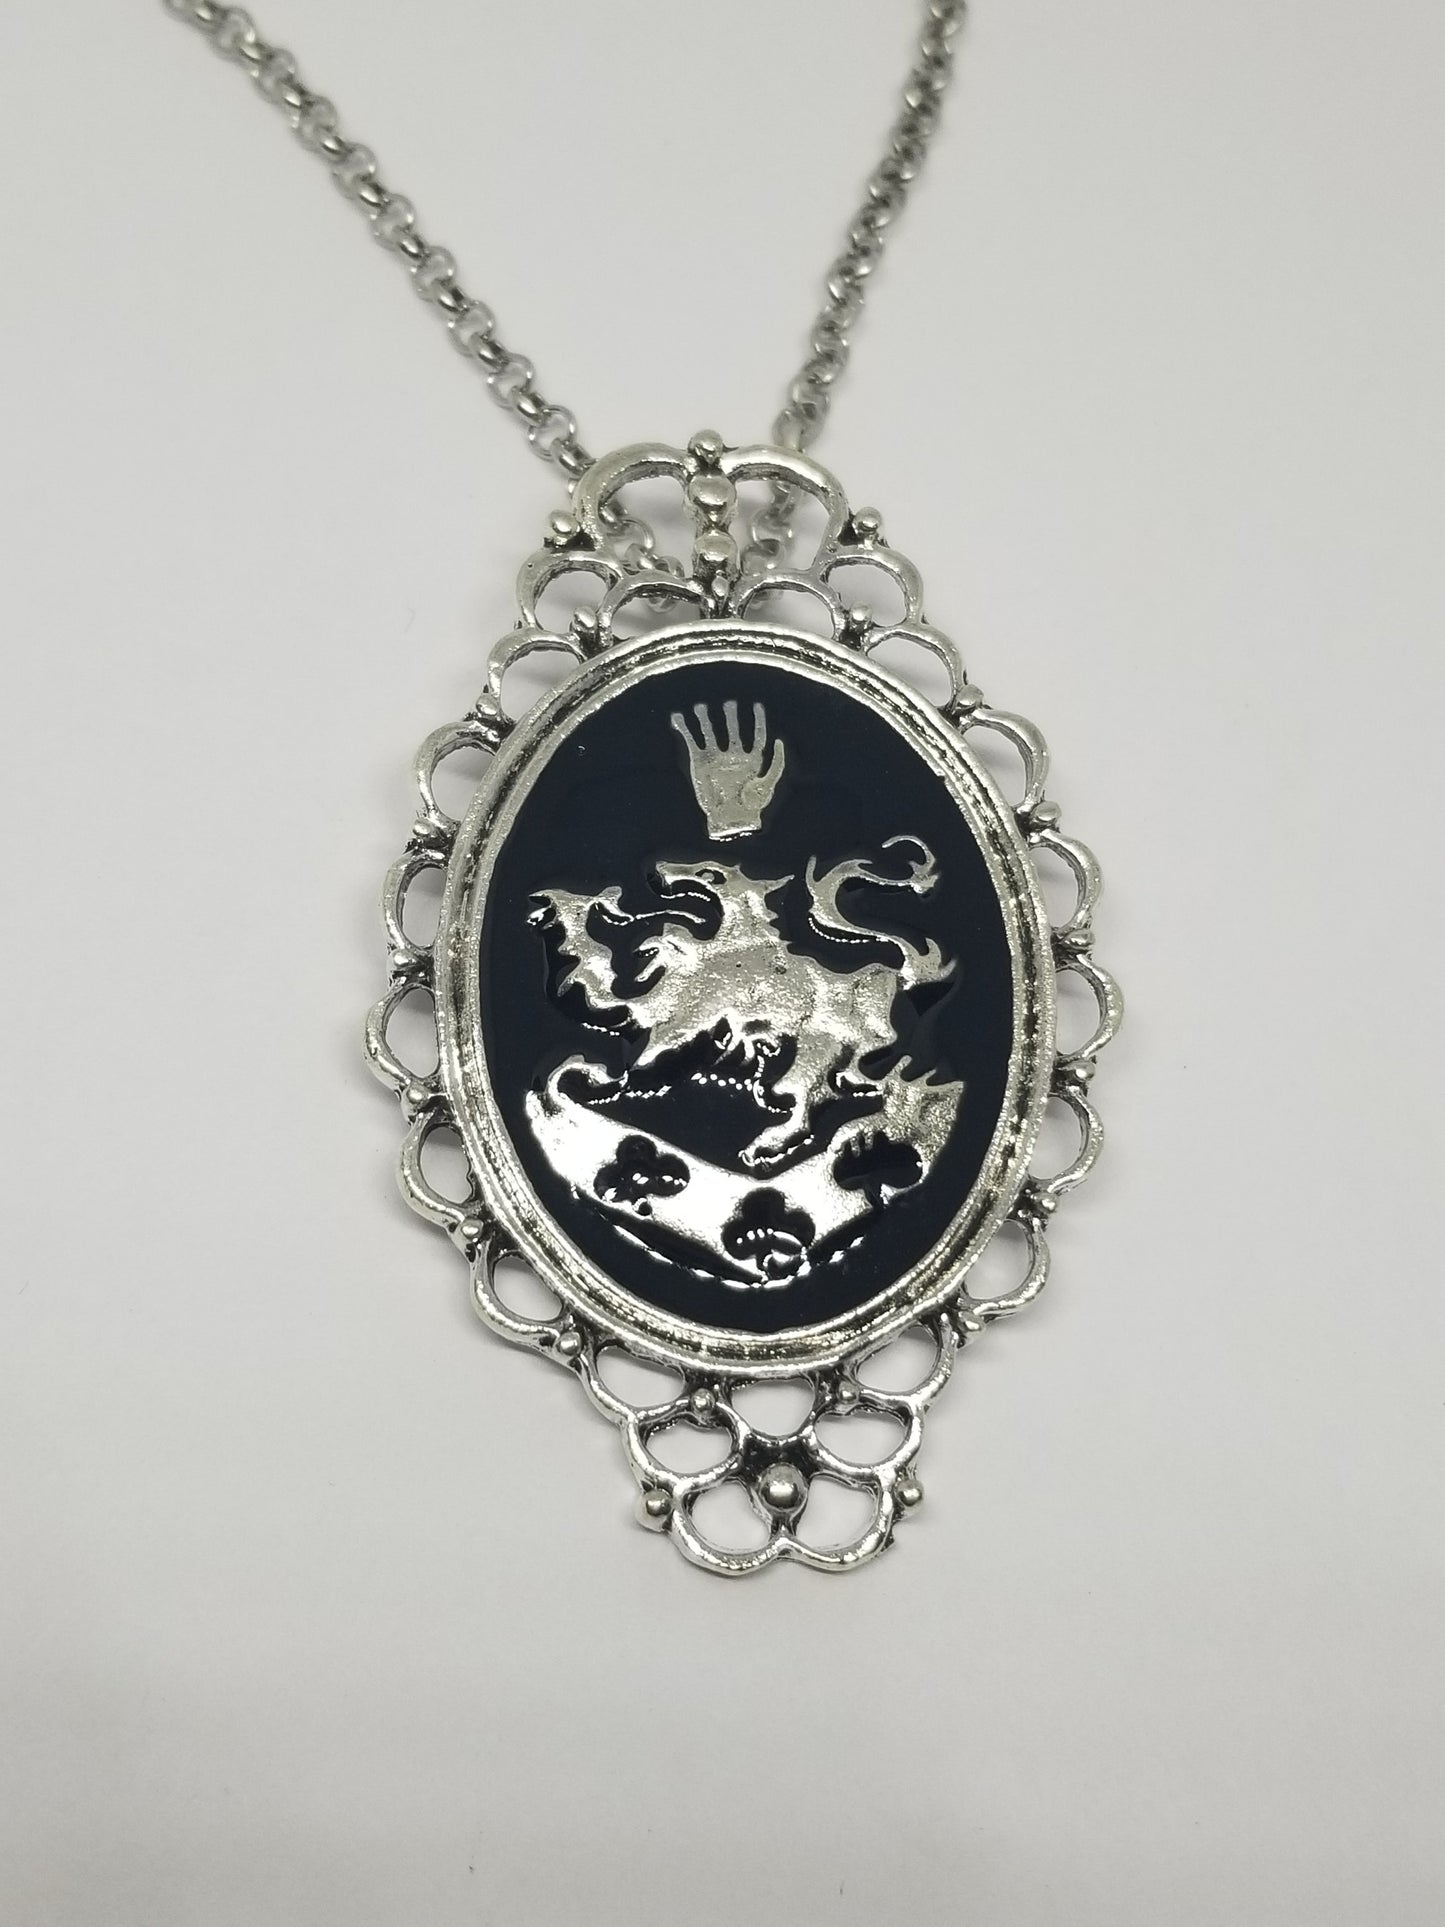 Vampire Diaries inspired black silver pendant necklace